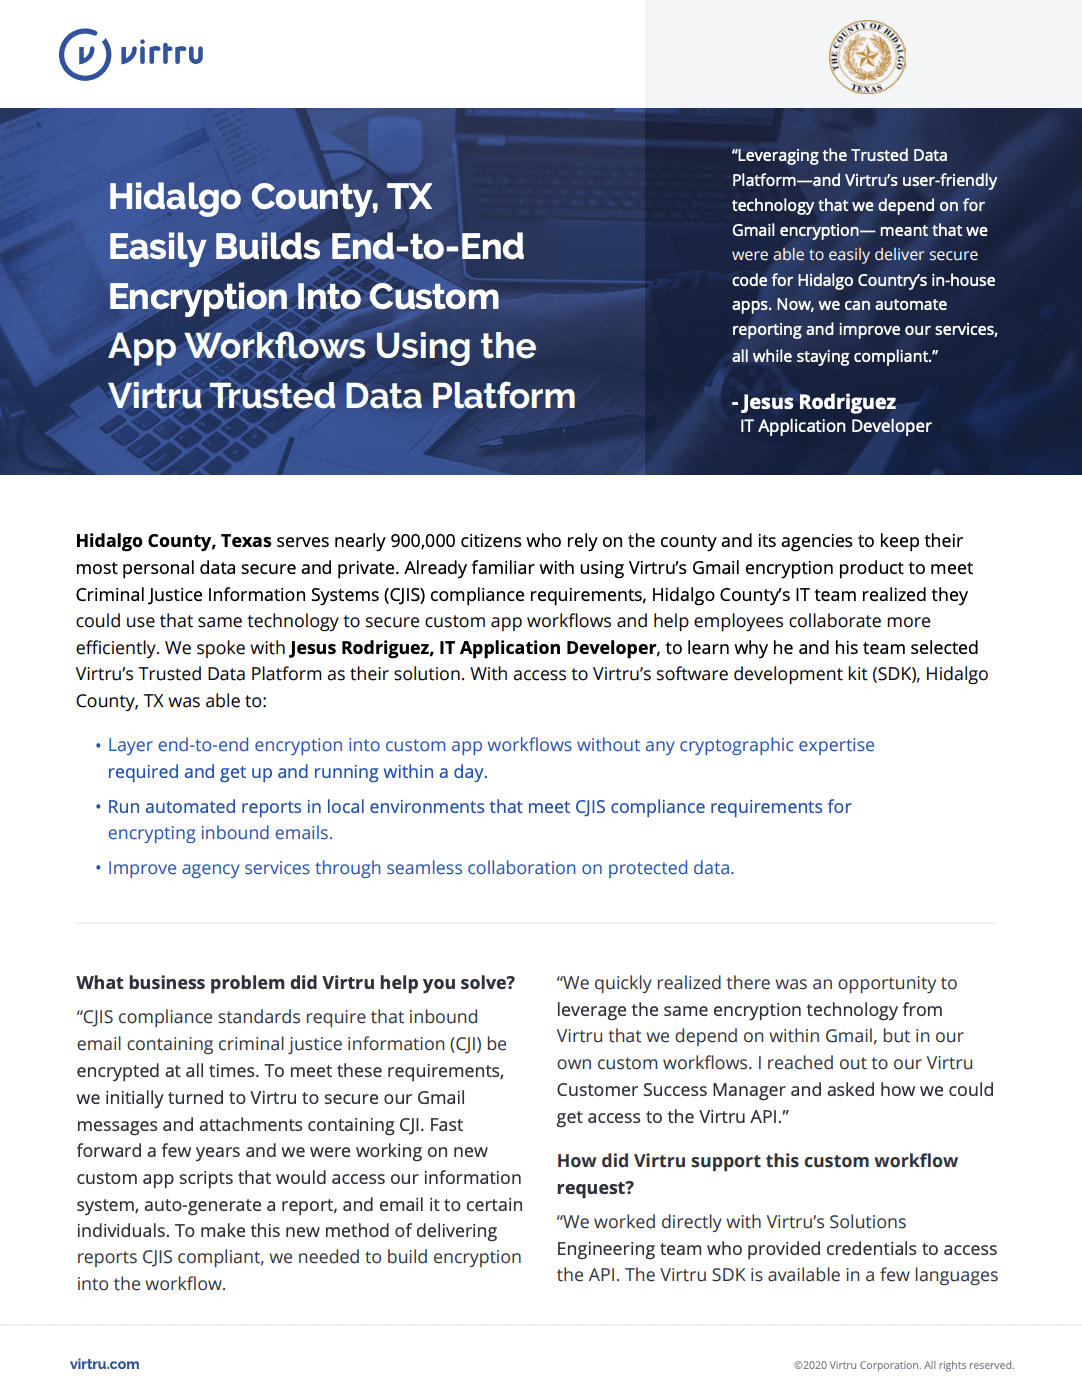 Hidalgo County Case Study Cover